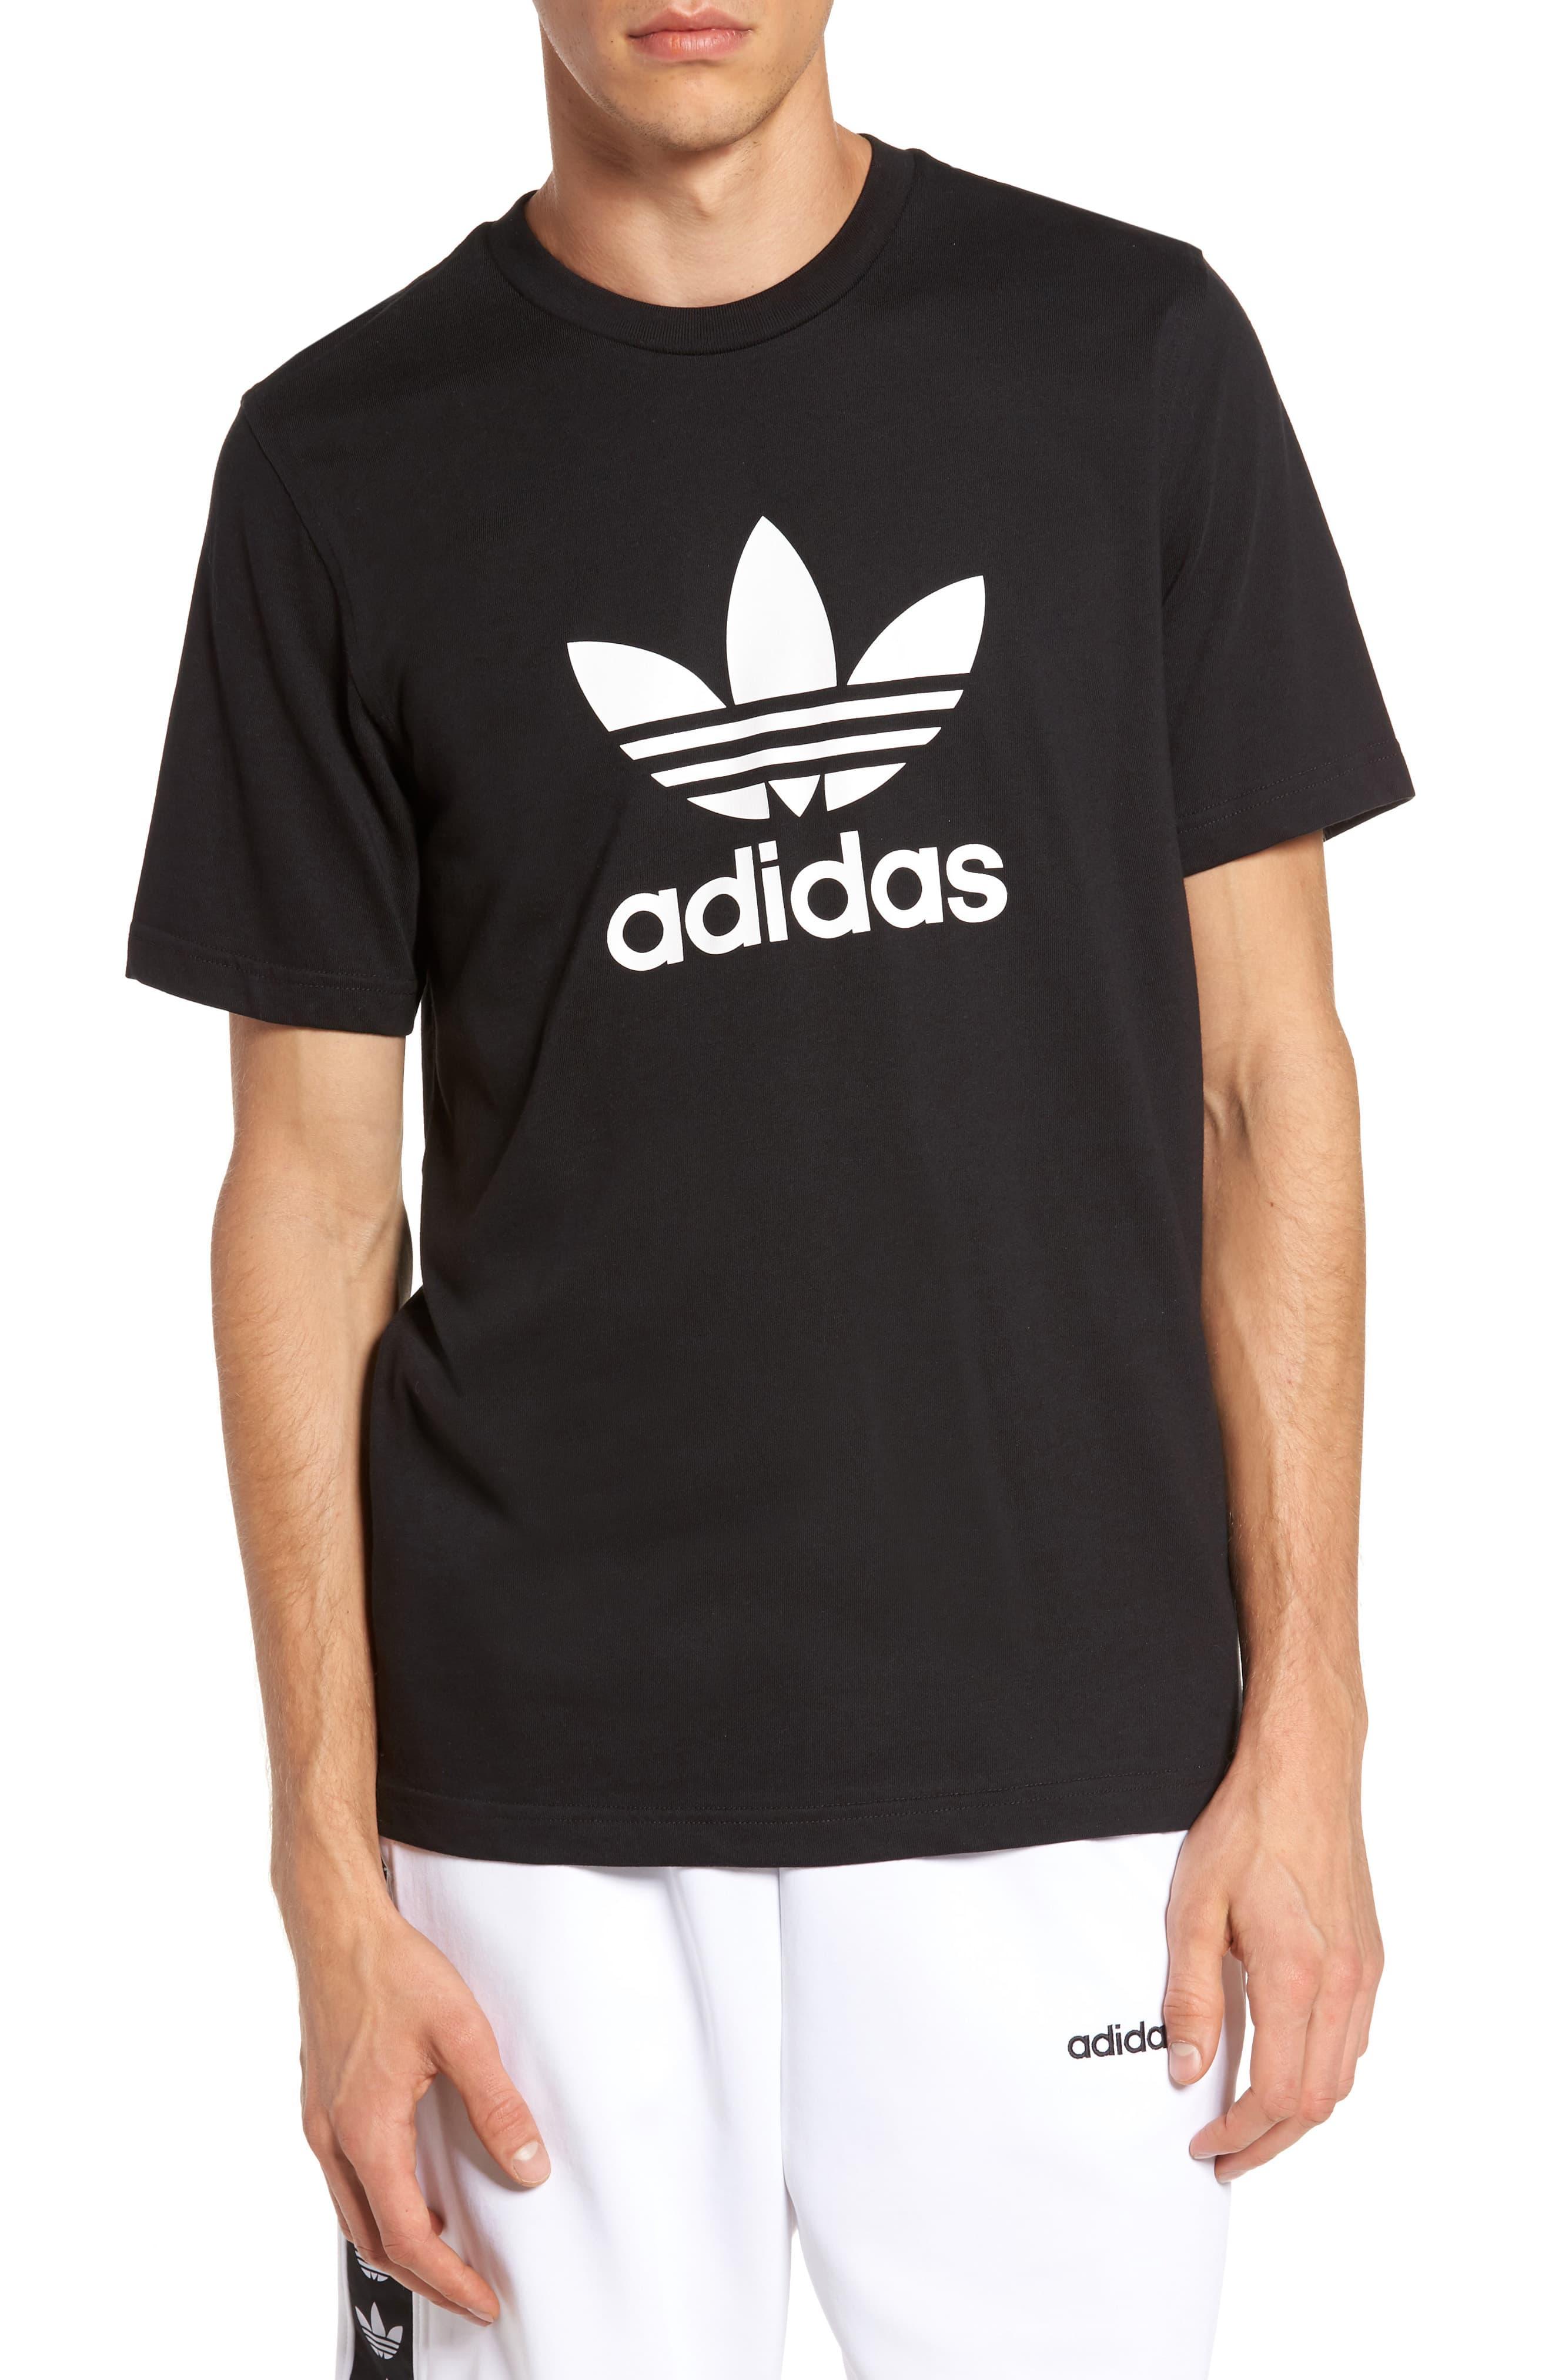 adidas Originals Trefoil Graphic T-shirt in Black for Men - Save 37% - Lyst